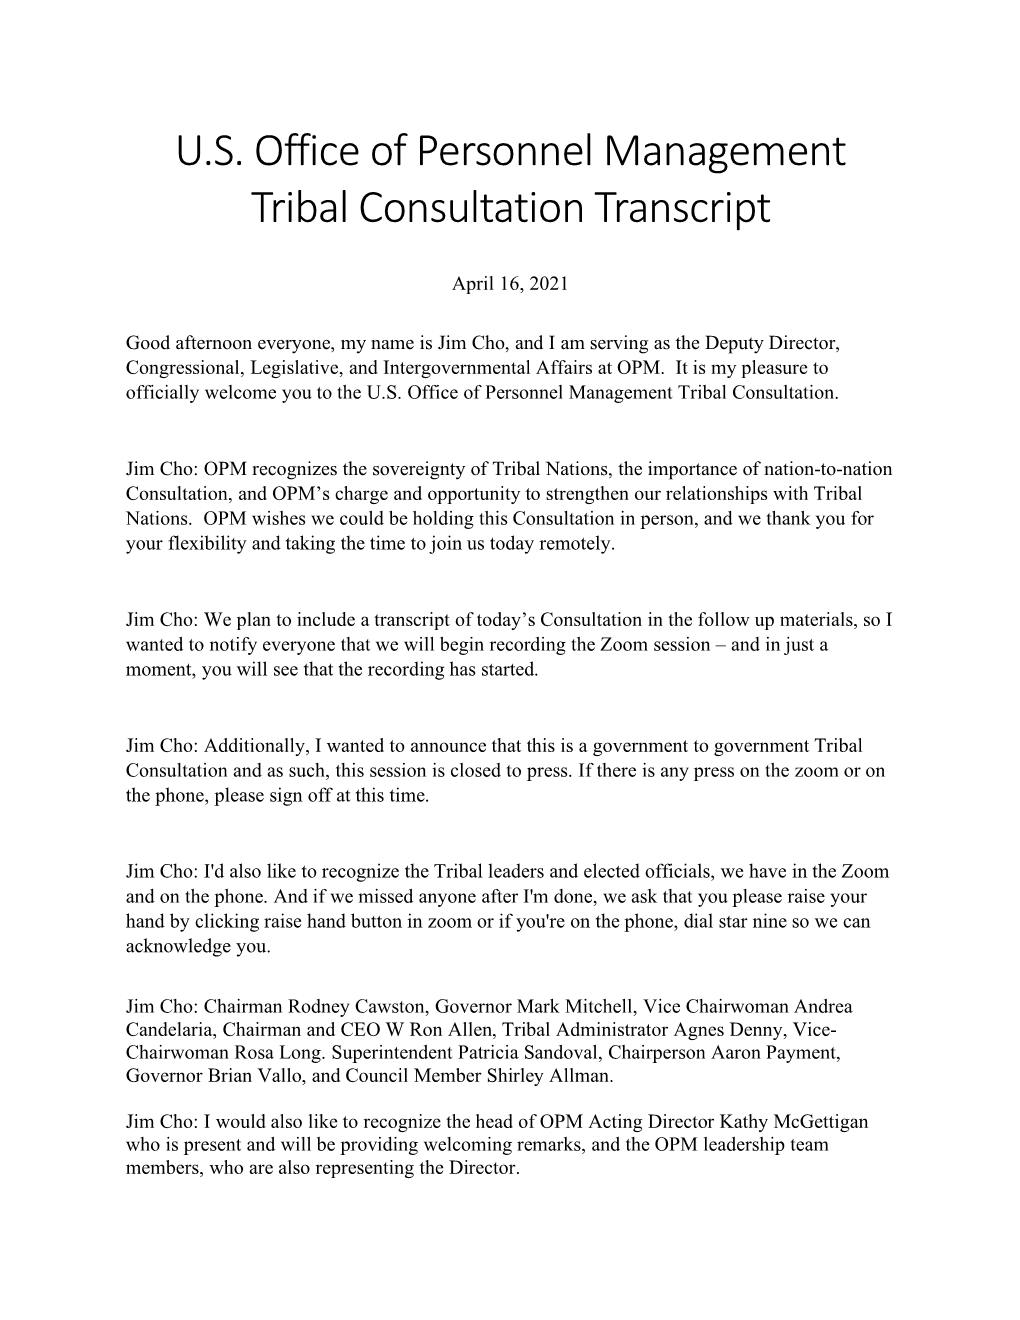 Tribal Consultation Meeting Transcript